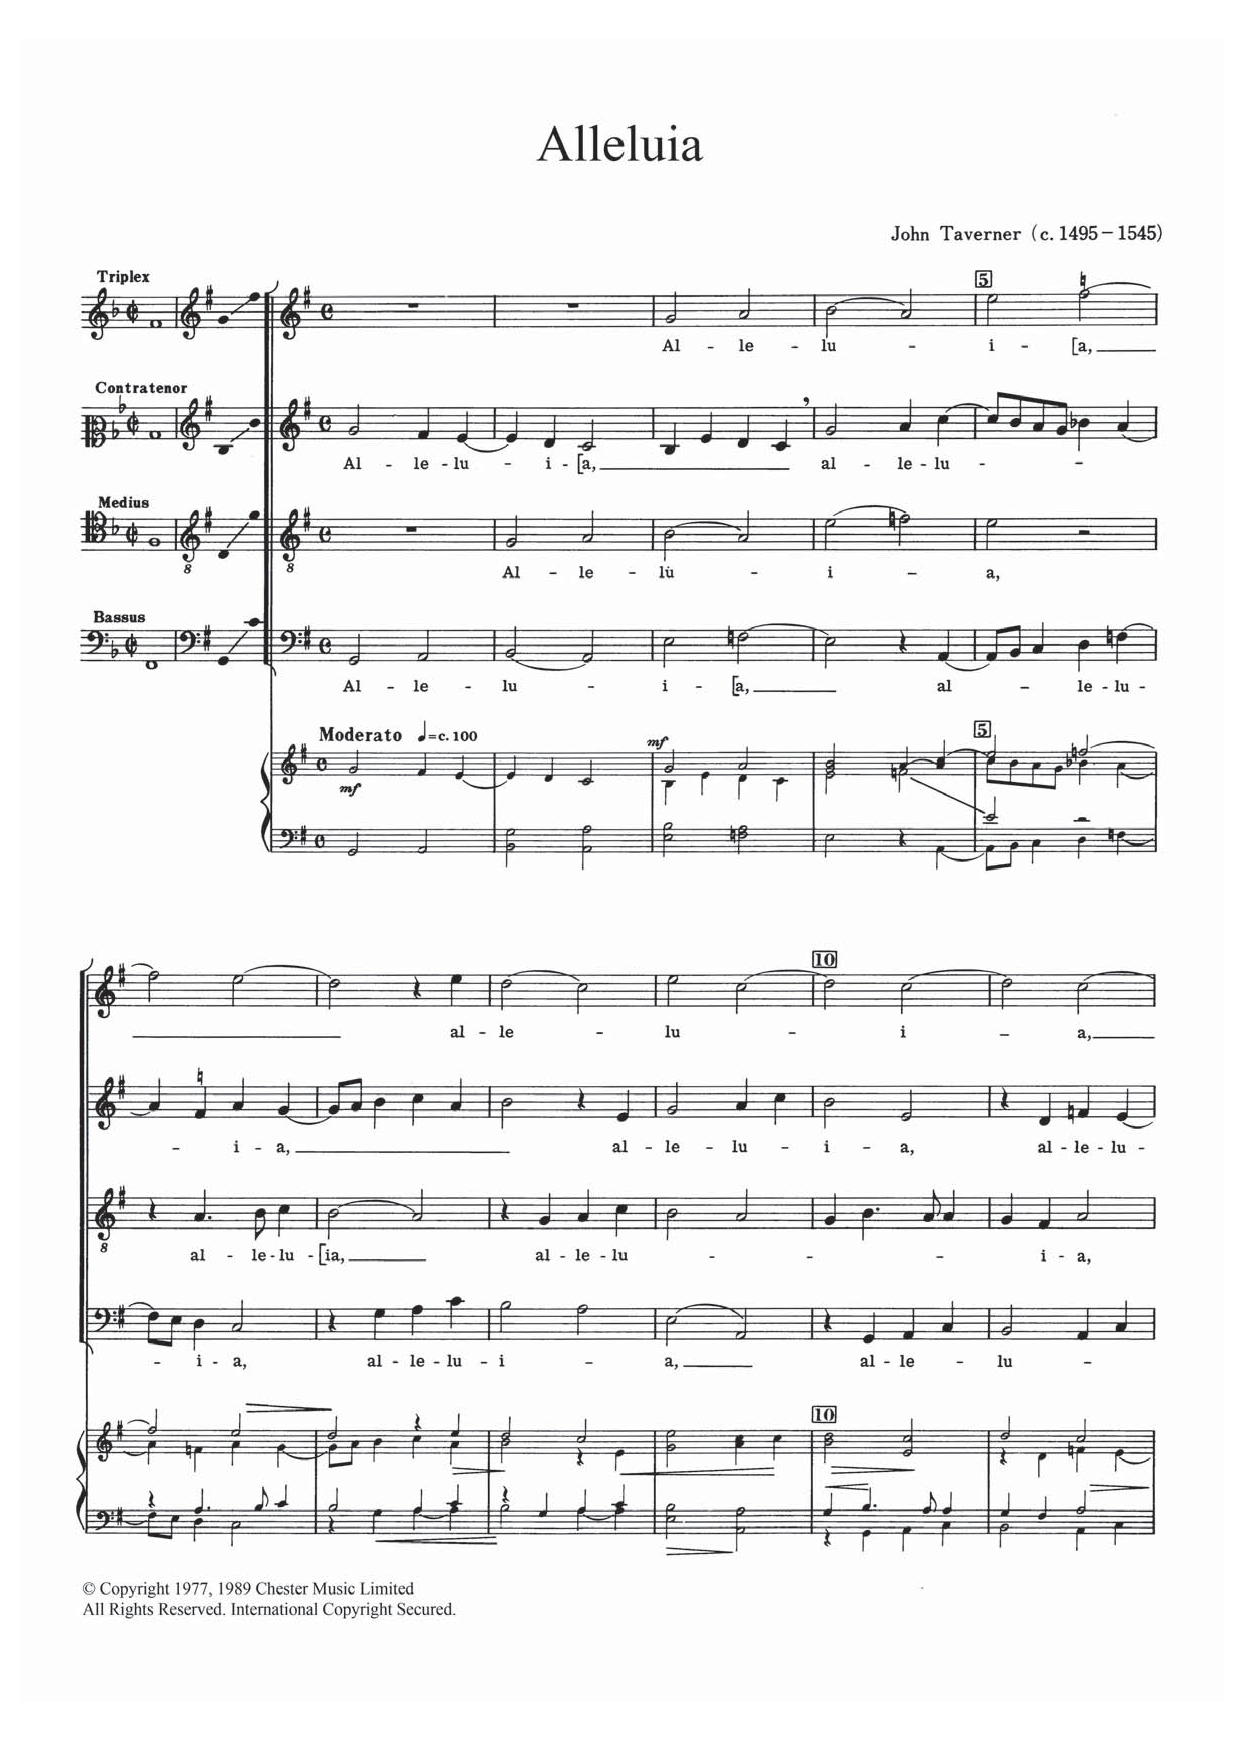 John Tavener Alleluia sheet music notes and chords arranged for SATB Choir